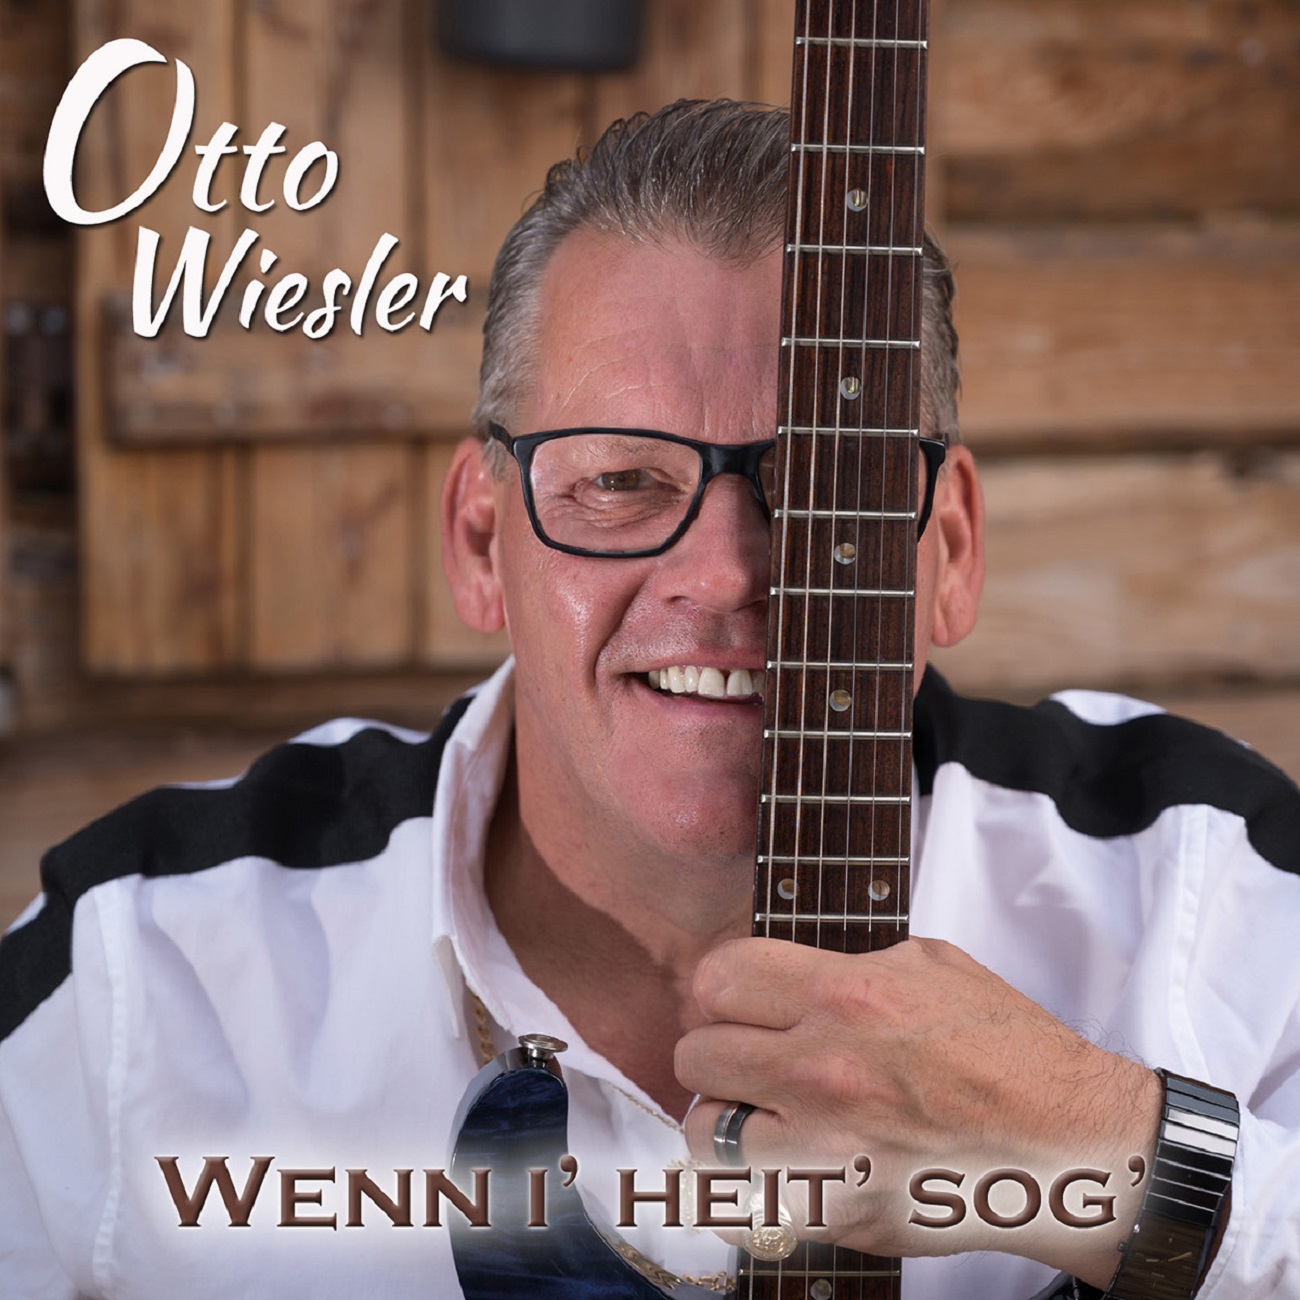 Otto Wiesler - Wenn i heit sog - Cover.jpg